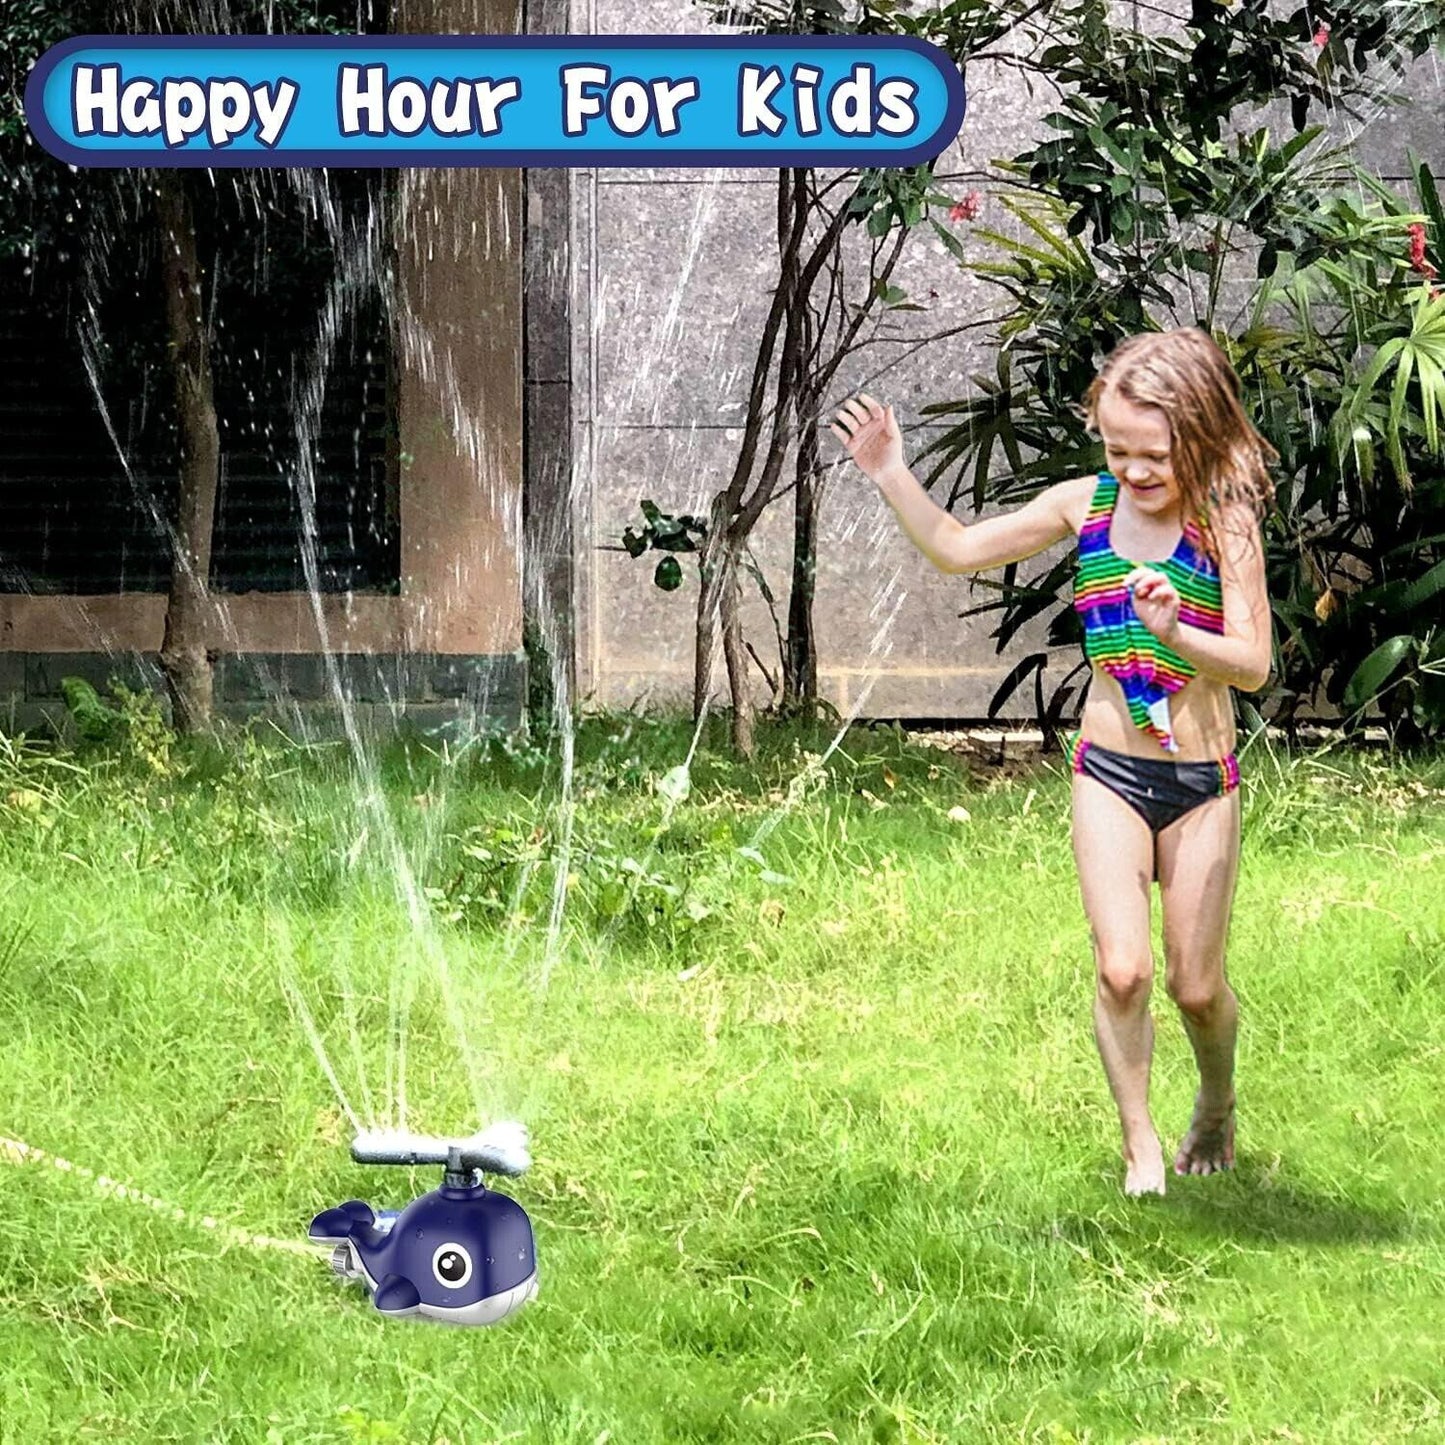 Splash Whale Sprinkler Water Spray Propeller Outdoor Garden Cooling Toys 3+